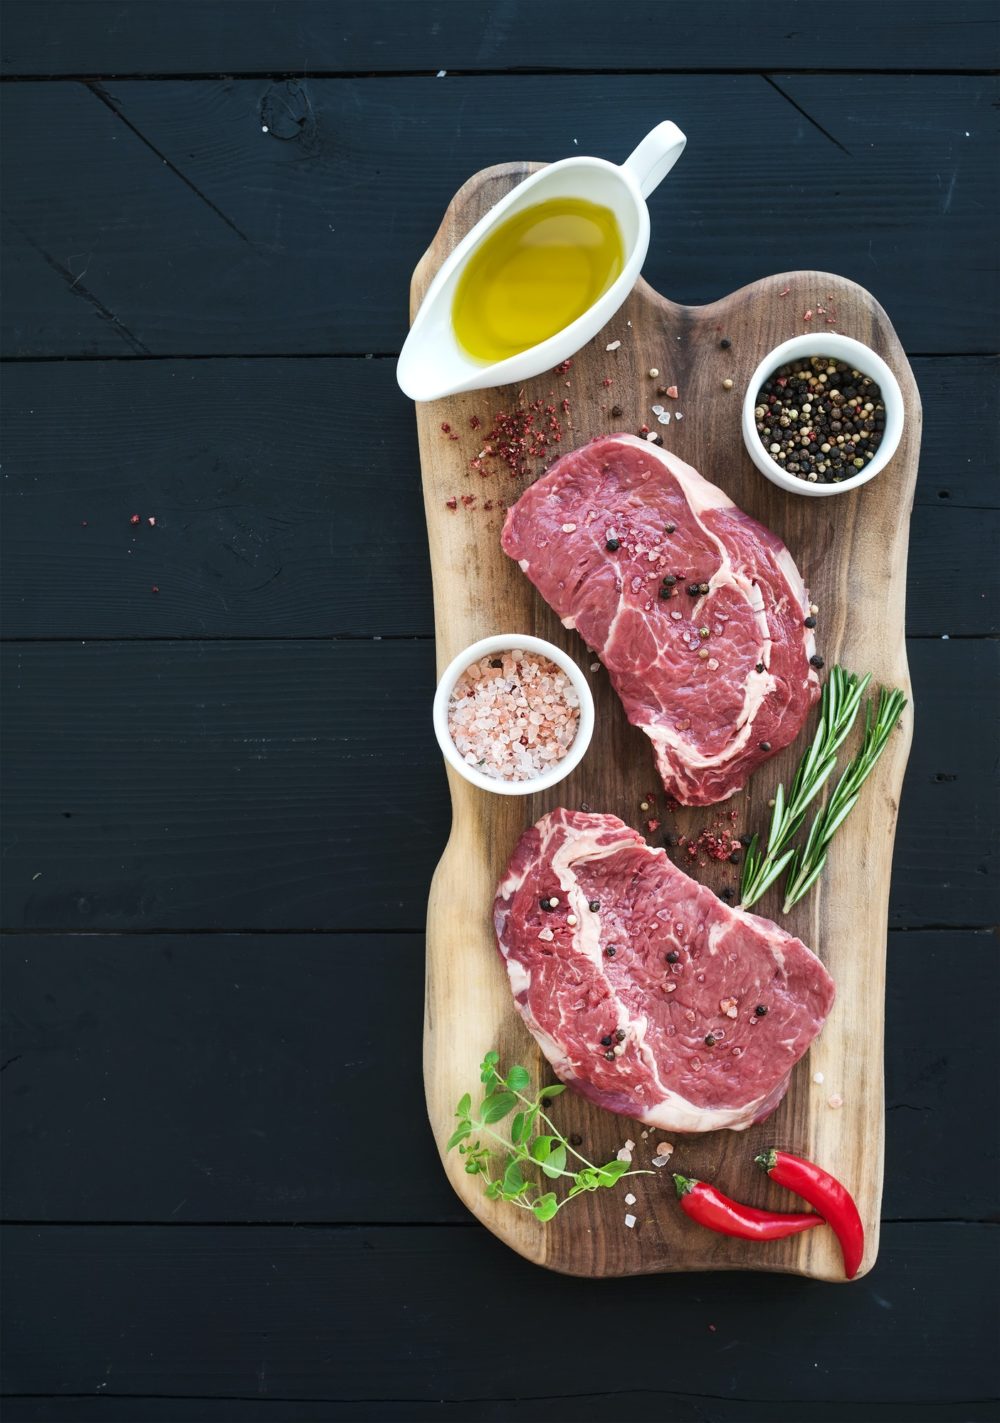 Raw fresh meat Ribeye steak entrecote and seasonings on cutting board over dark wooden background.